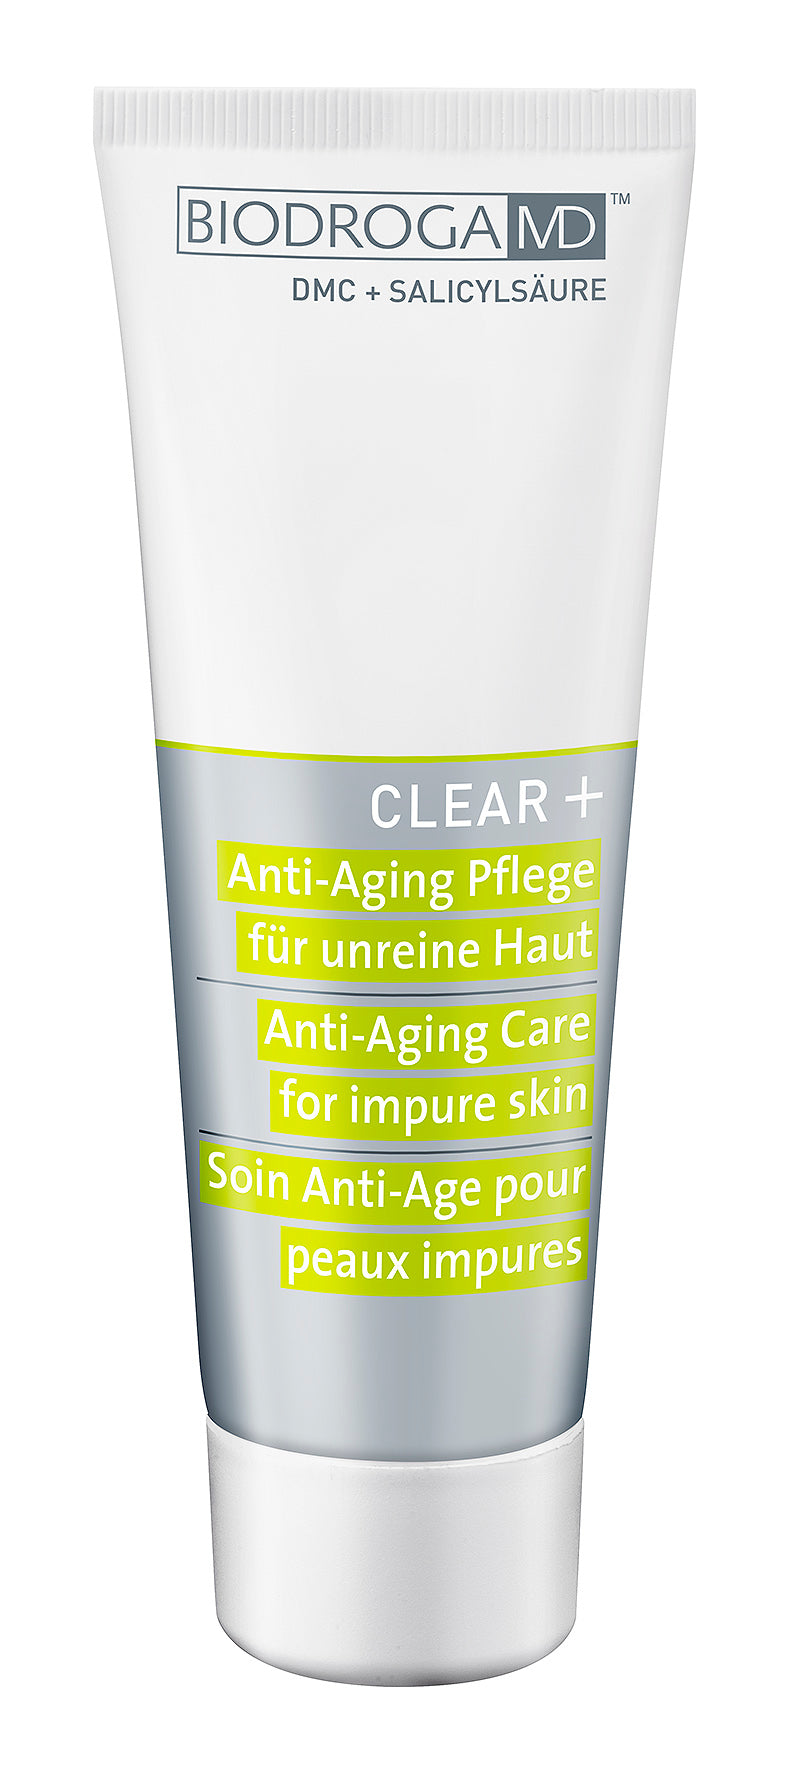 Clear+ Anti-Age Pflege unreine Haut